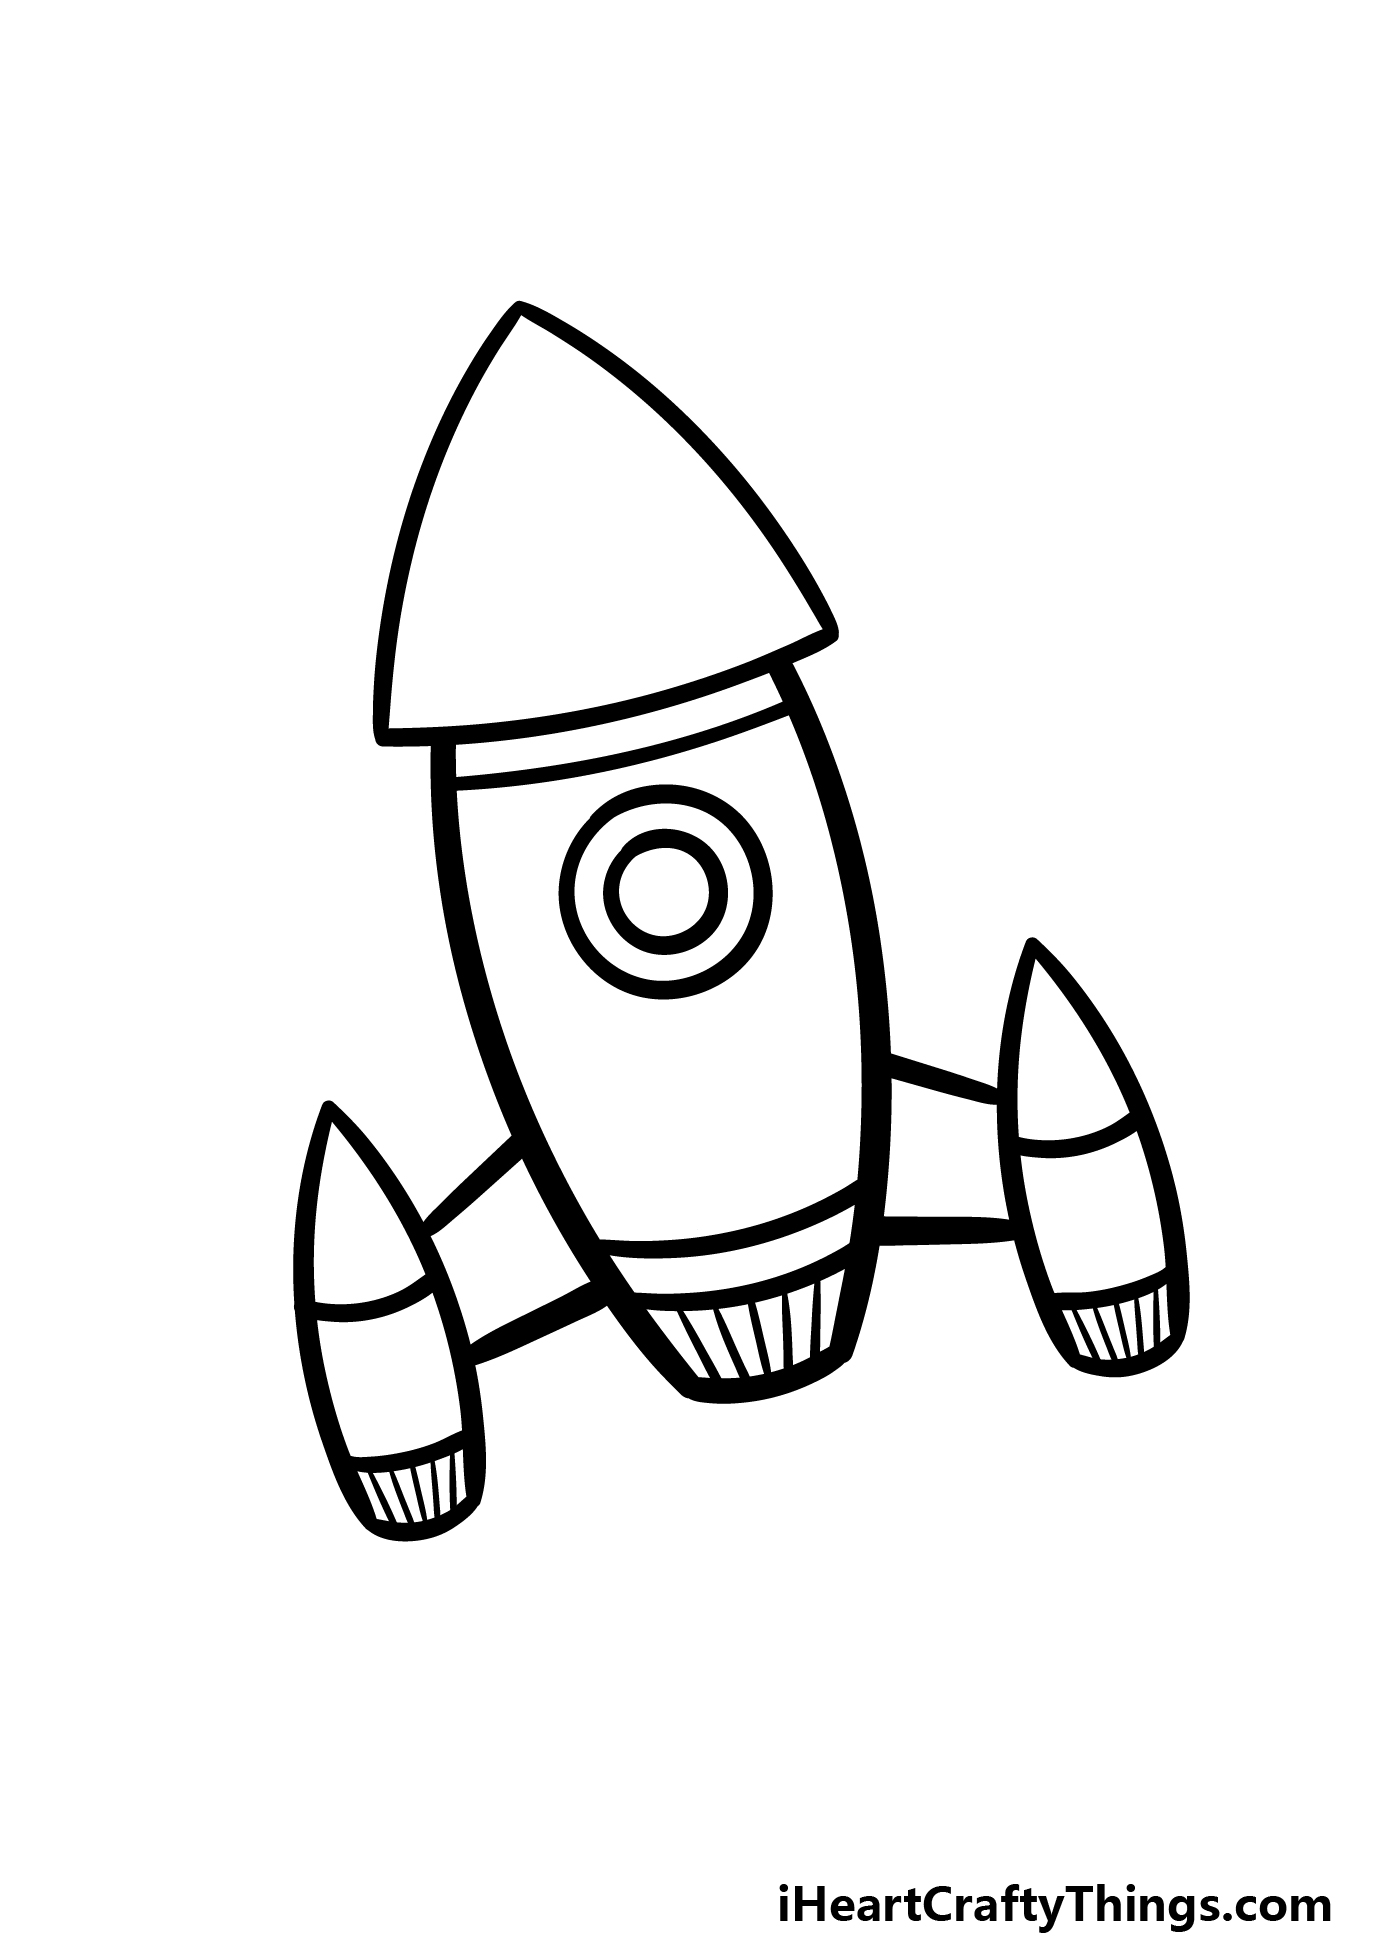 how to draw a cartoon rocket step 4